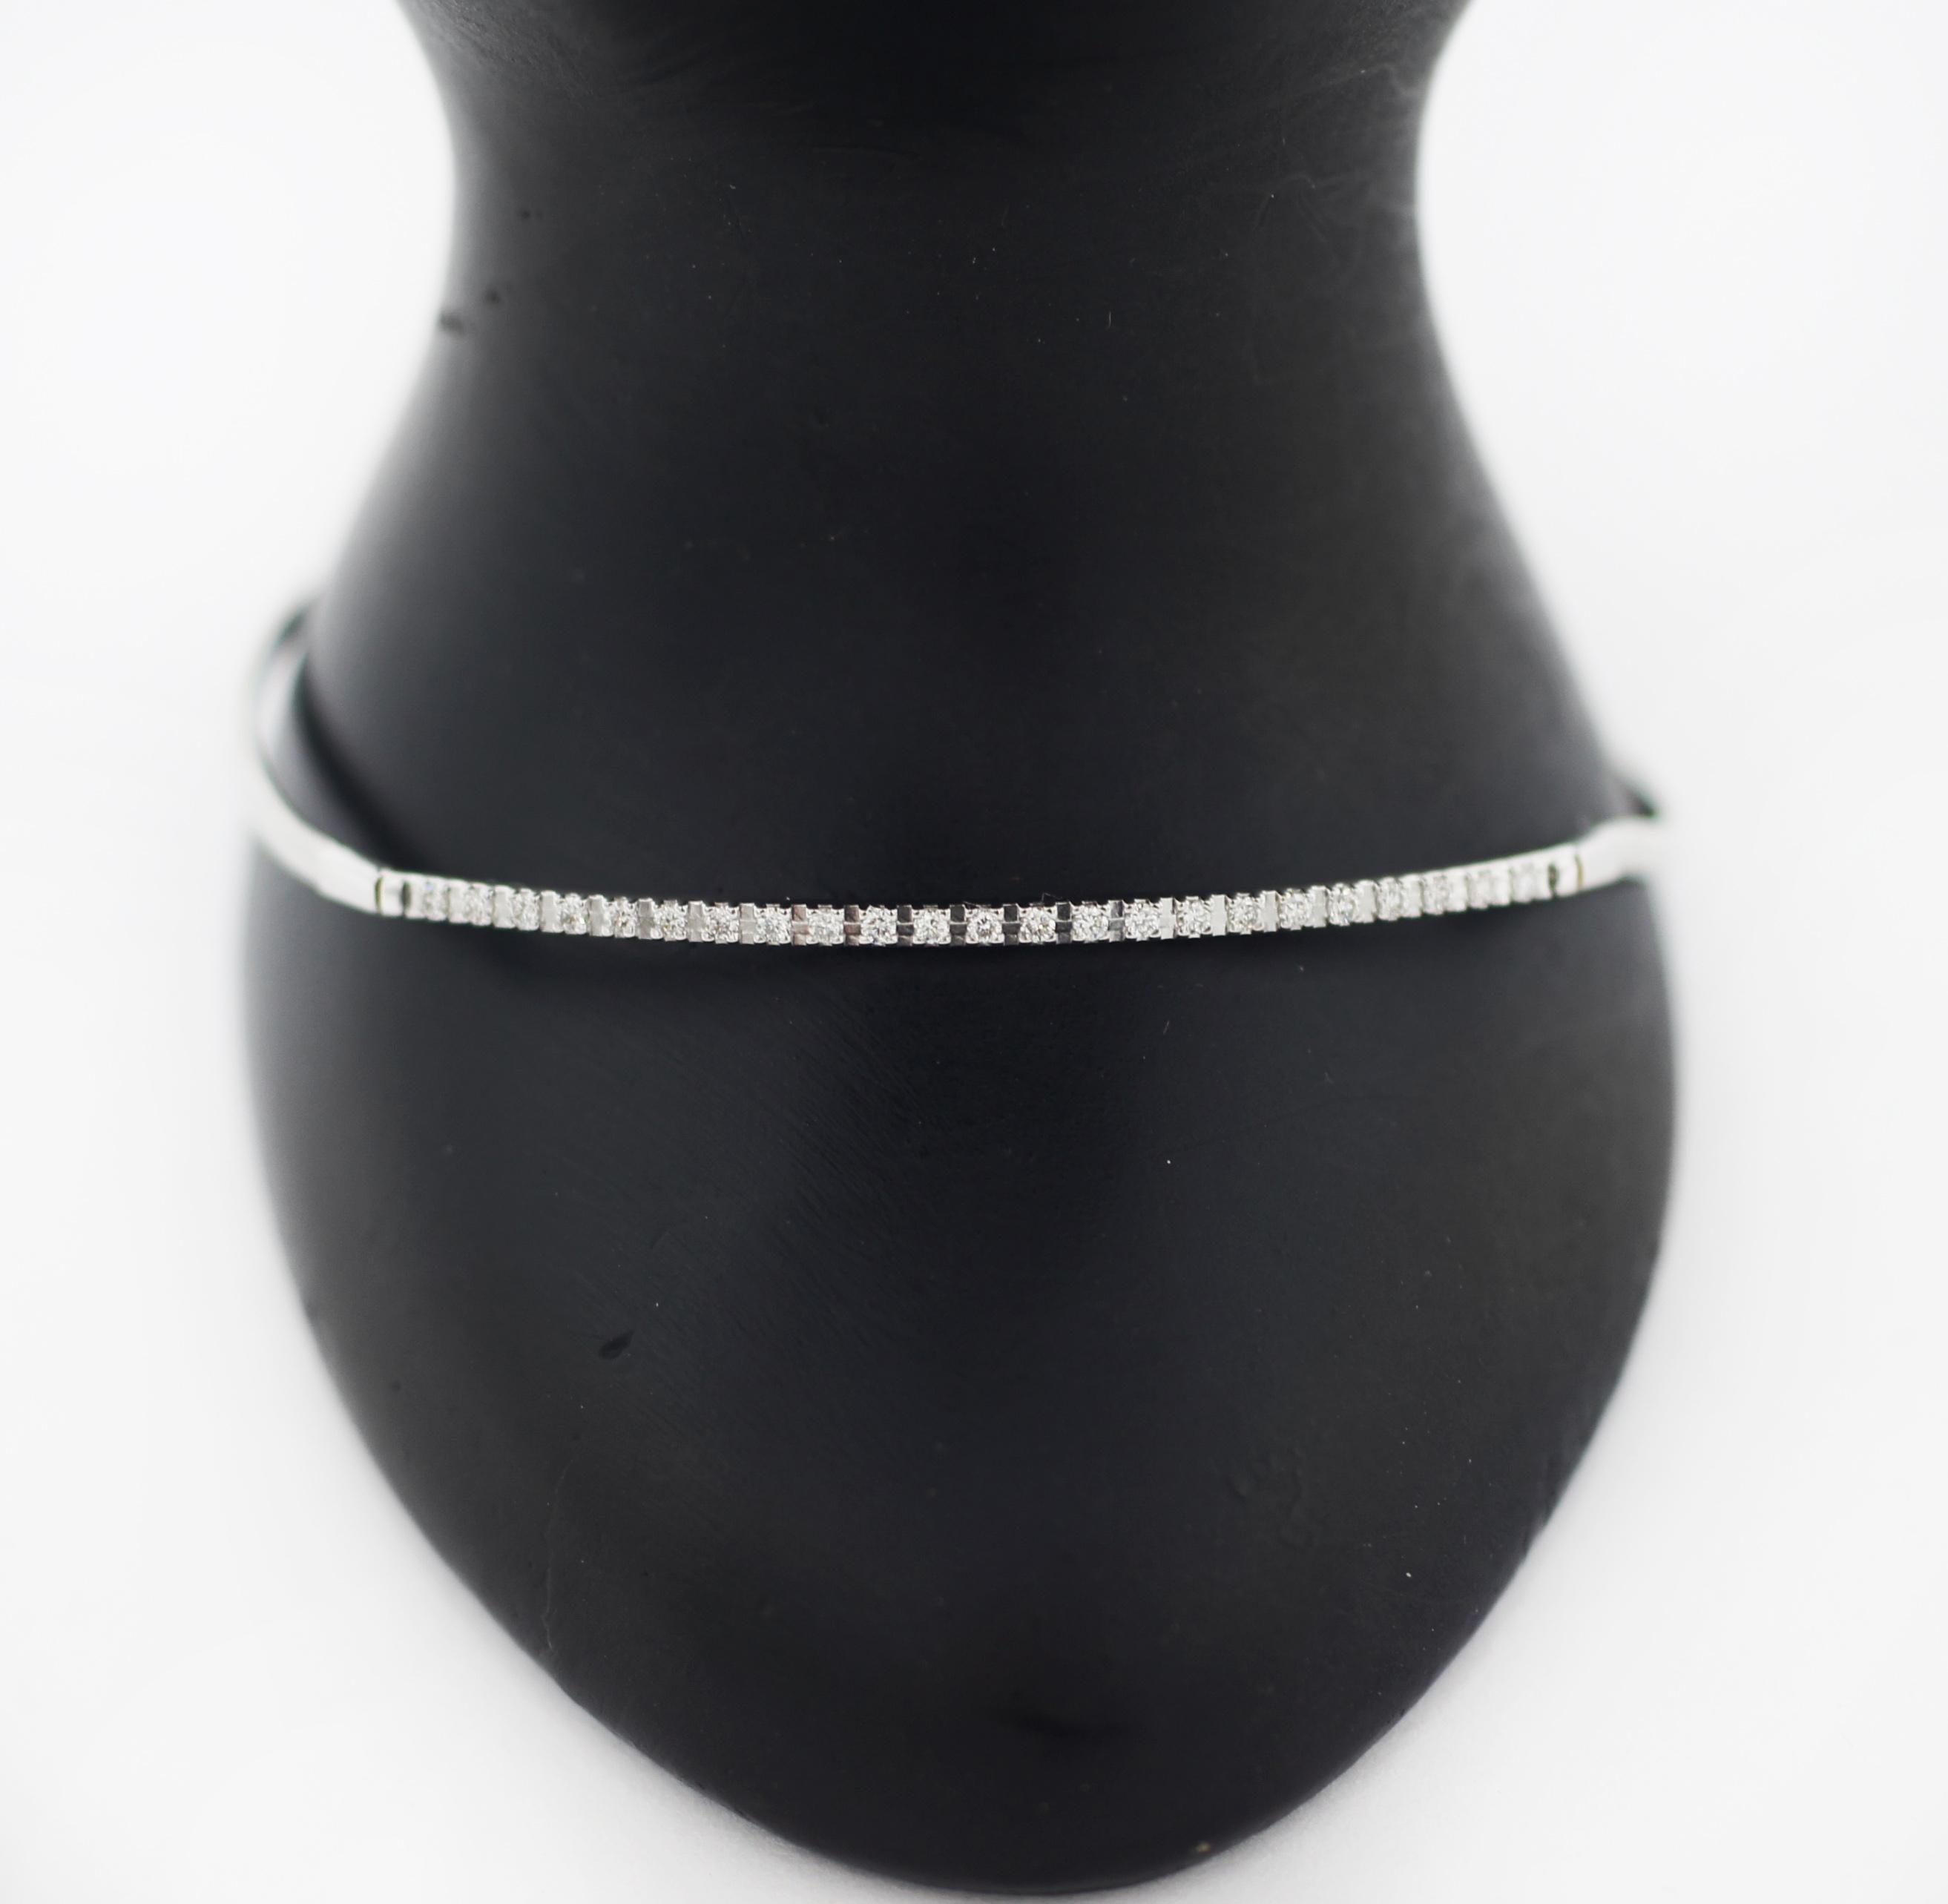 MARCO BICEGO
Bracelet en forme de barre de diamant
De la Collection S.A.O.
En or blanc 18 carats
23 diamants ronds brillants
Environ 7